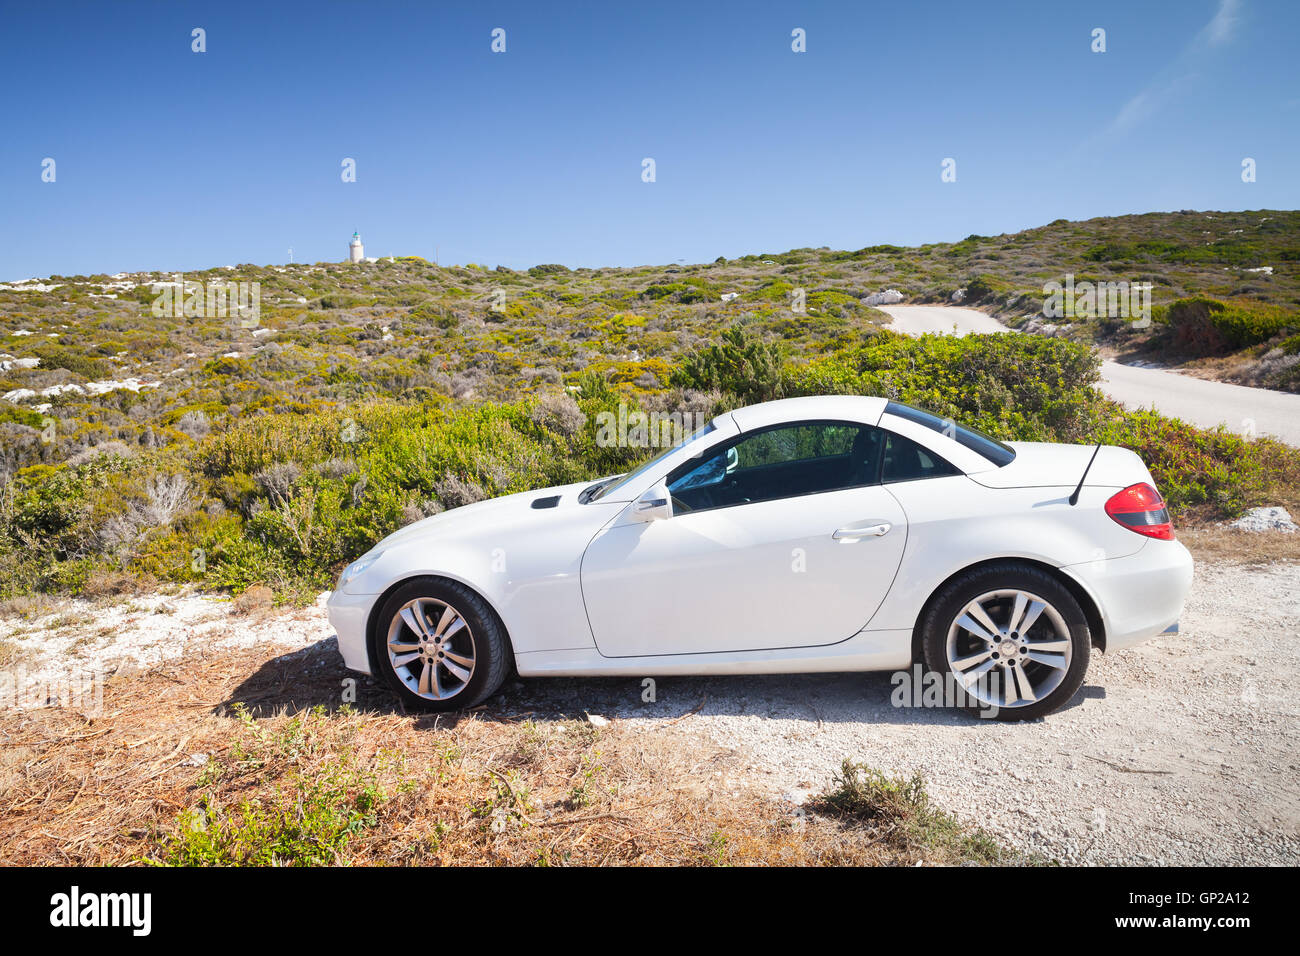 Zakynthos, Greece - August 20, 2016: White Mercedes-Benz SLK 200 pre-facelift car stands on the roadside in summer Stock Photo